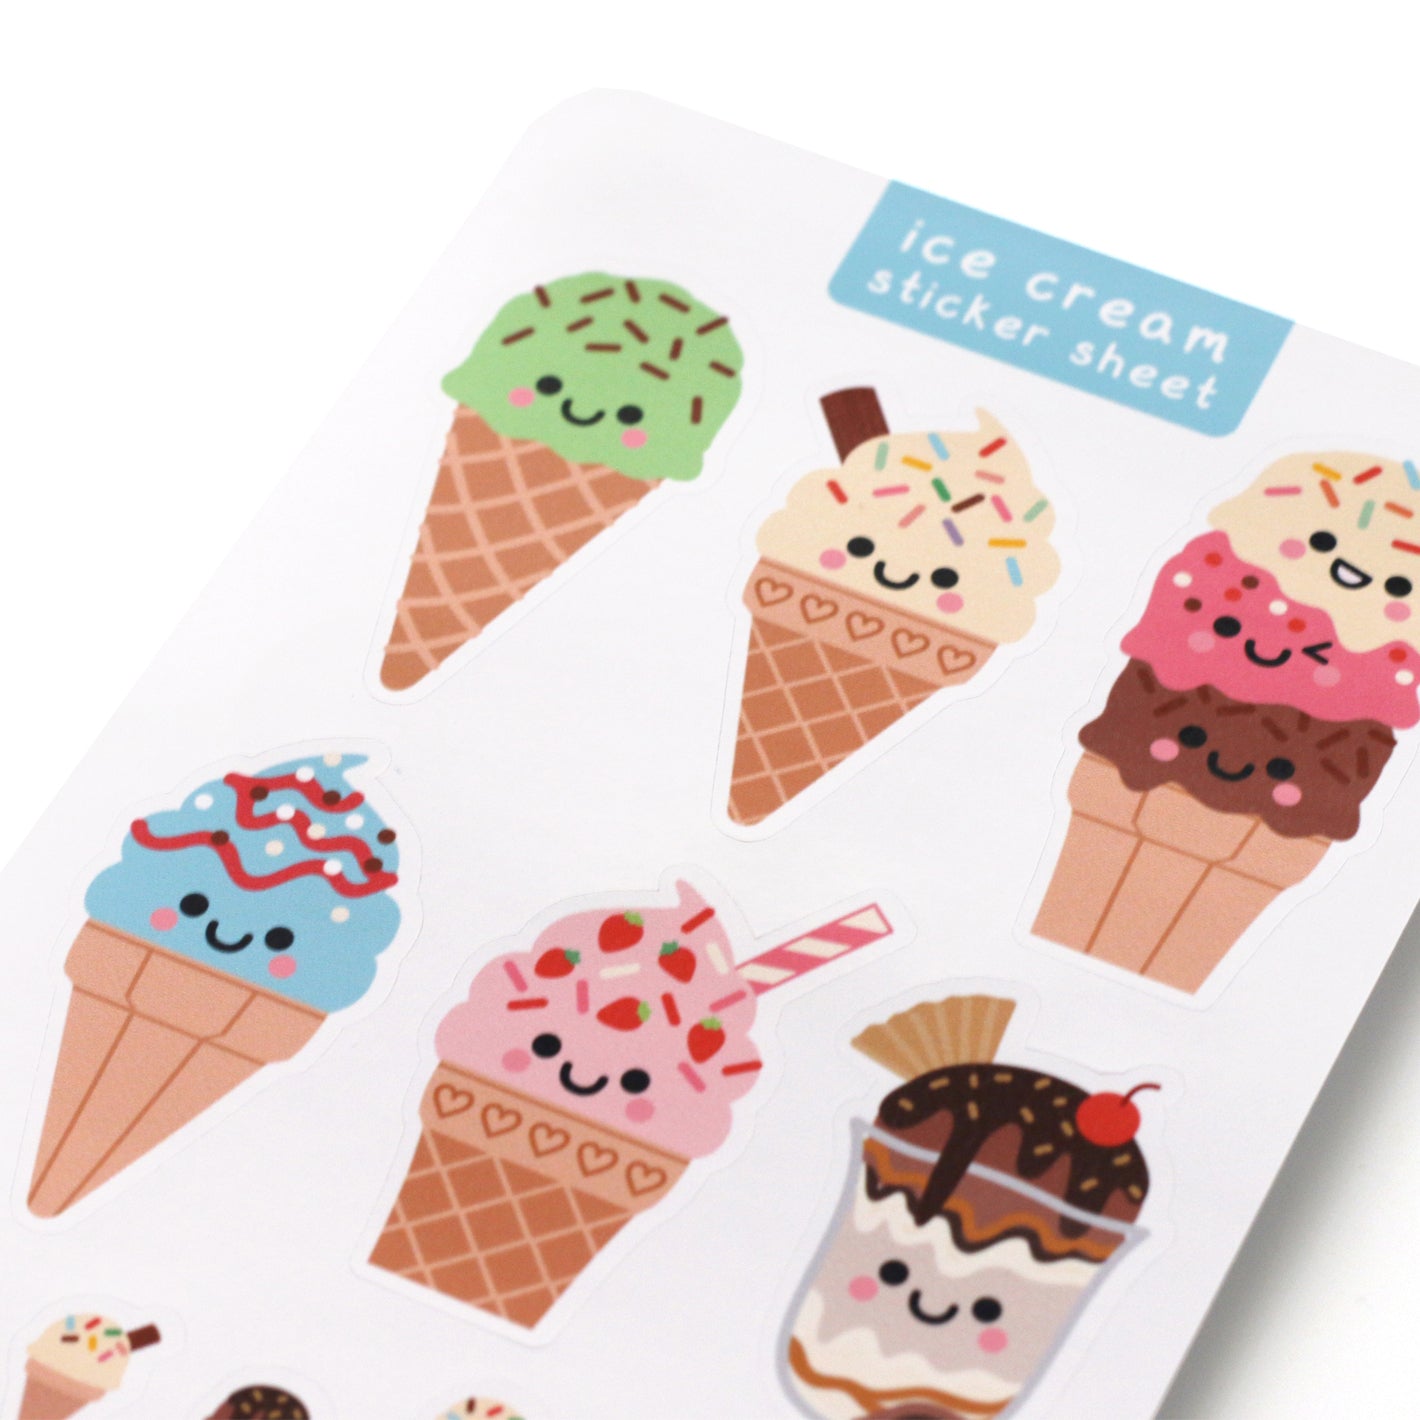 Ice Cream sticker sheet printed on glossy sticker paper